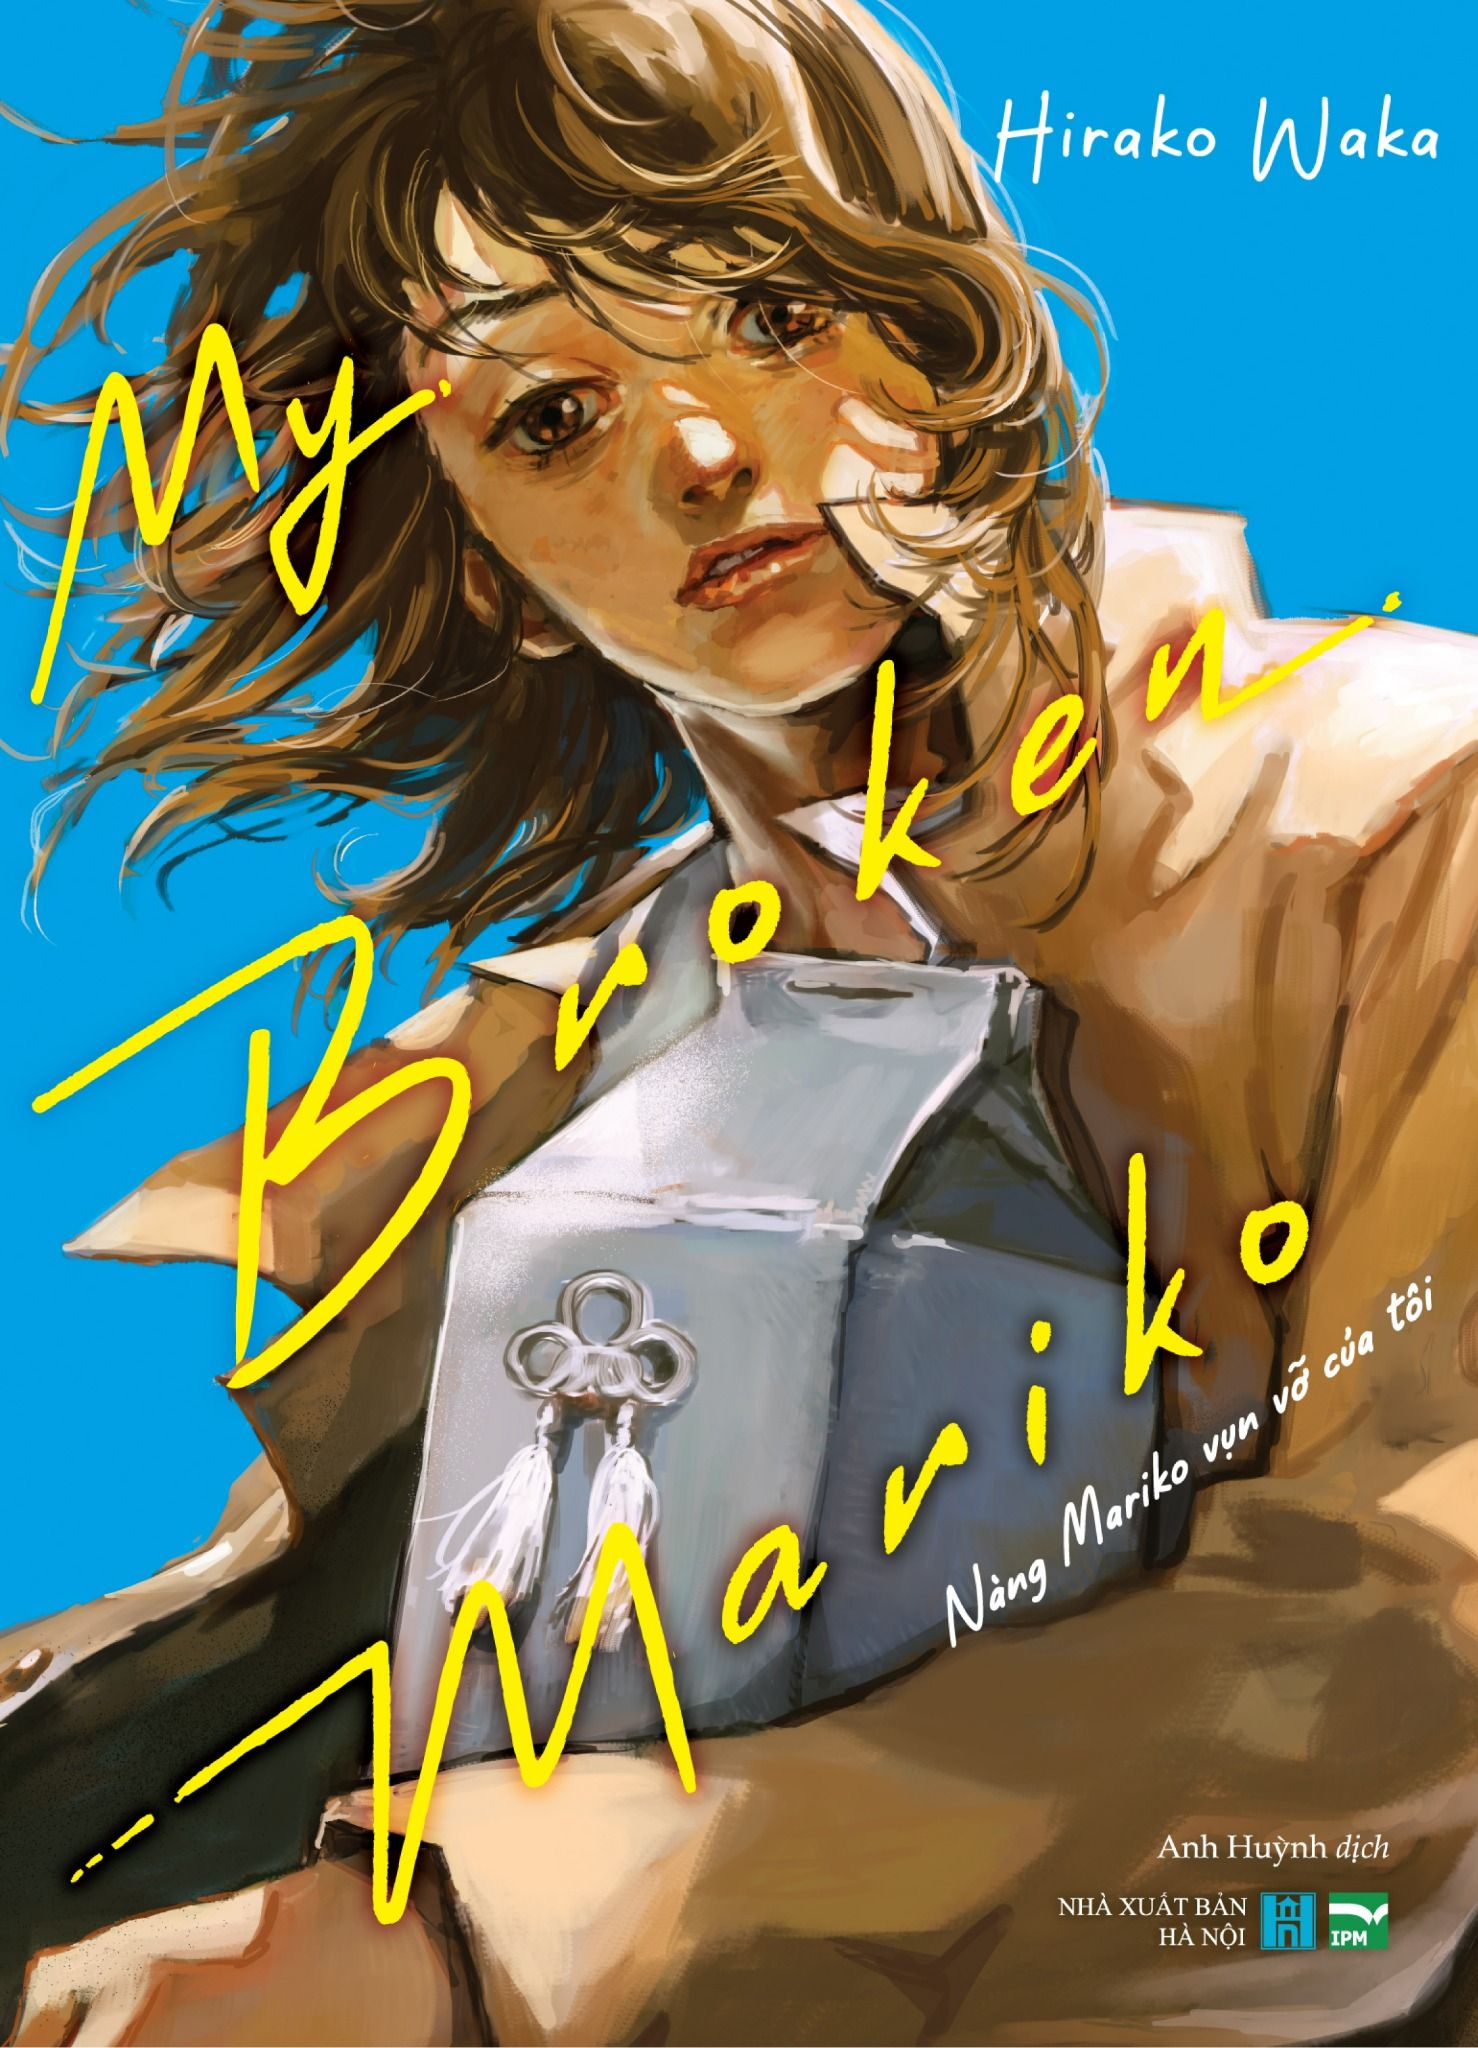 My Broken Mariko